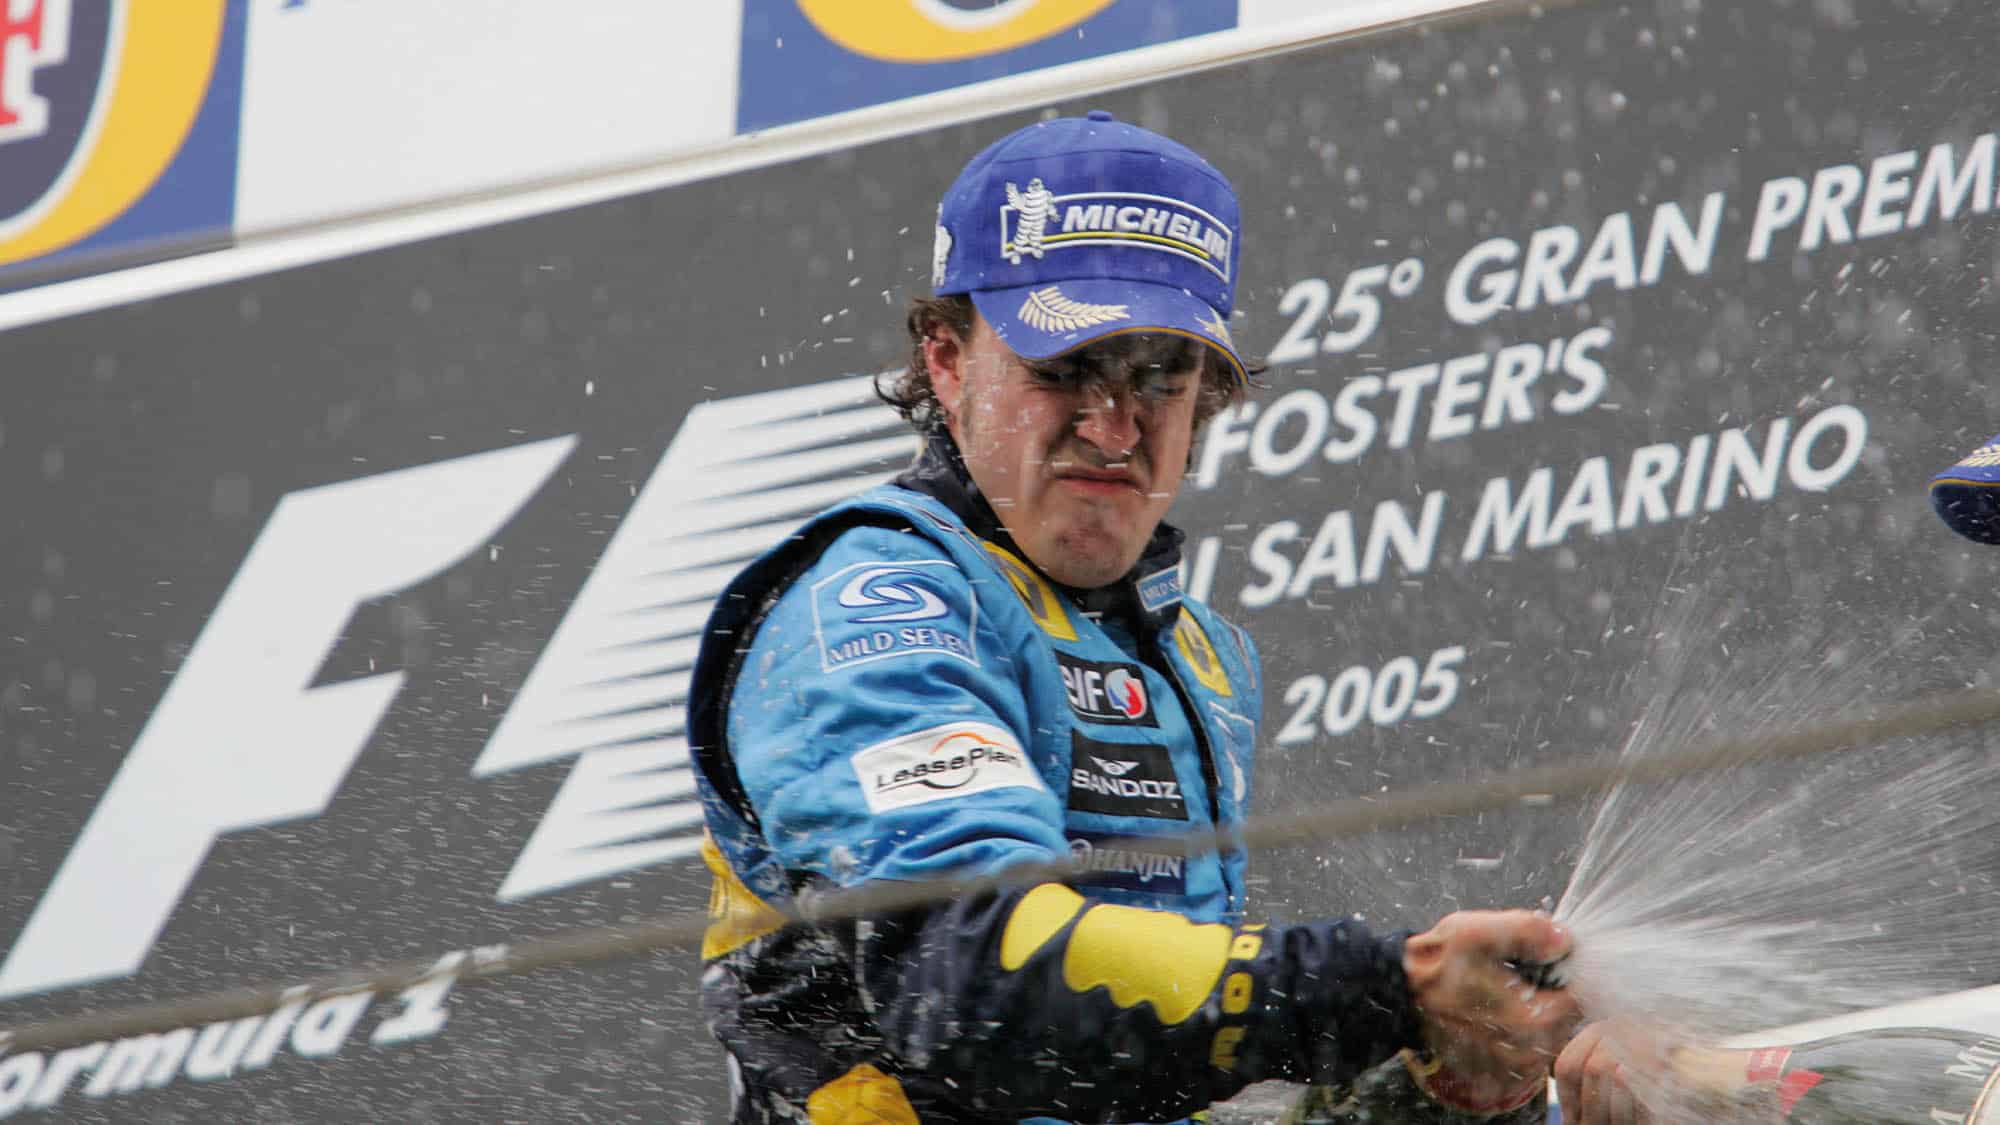 FErnando Alonso celebrates winning the 2005 San MArino Grand Prix with champagne on the podium at Imola